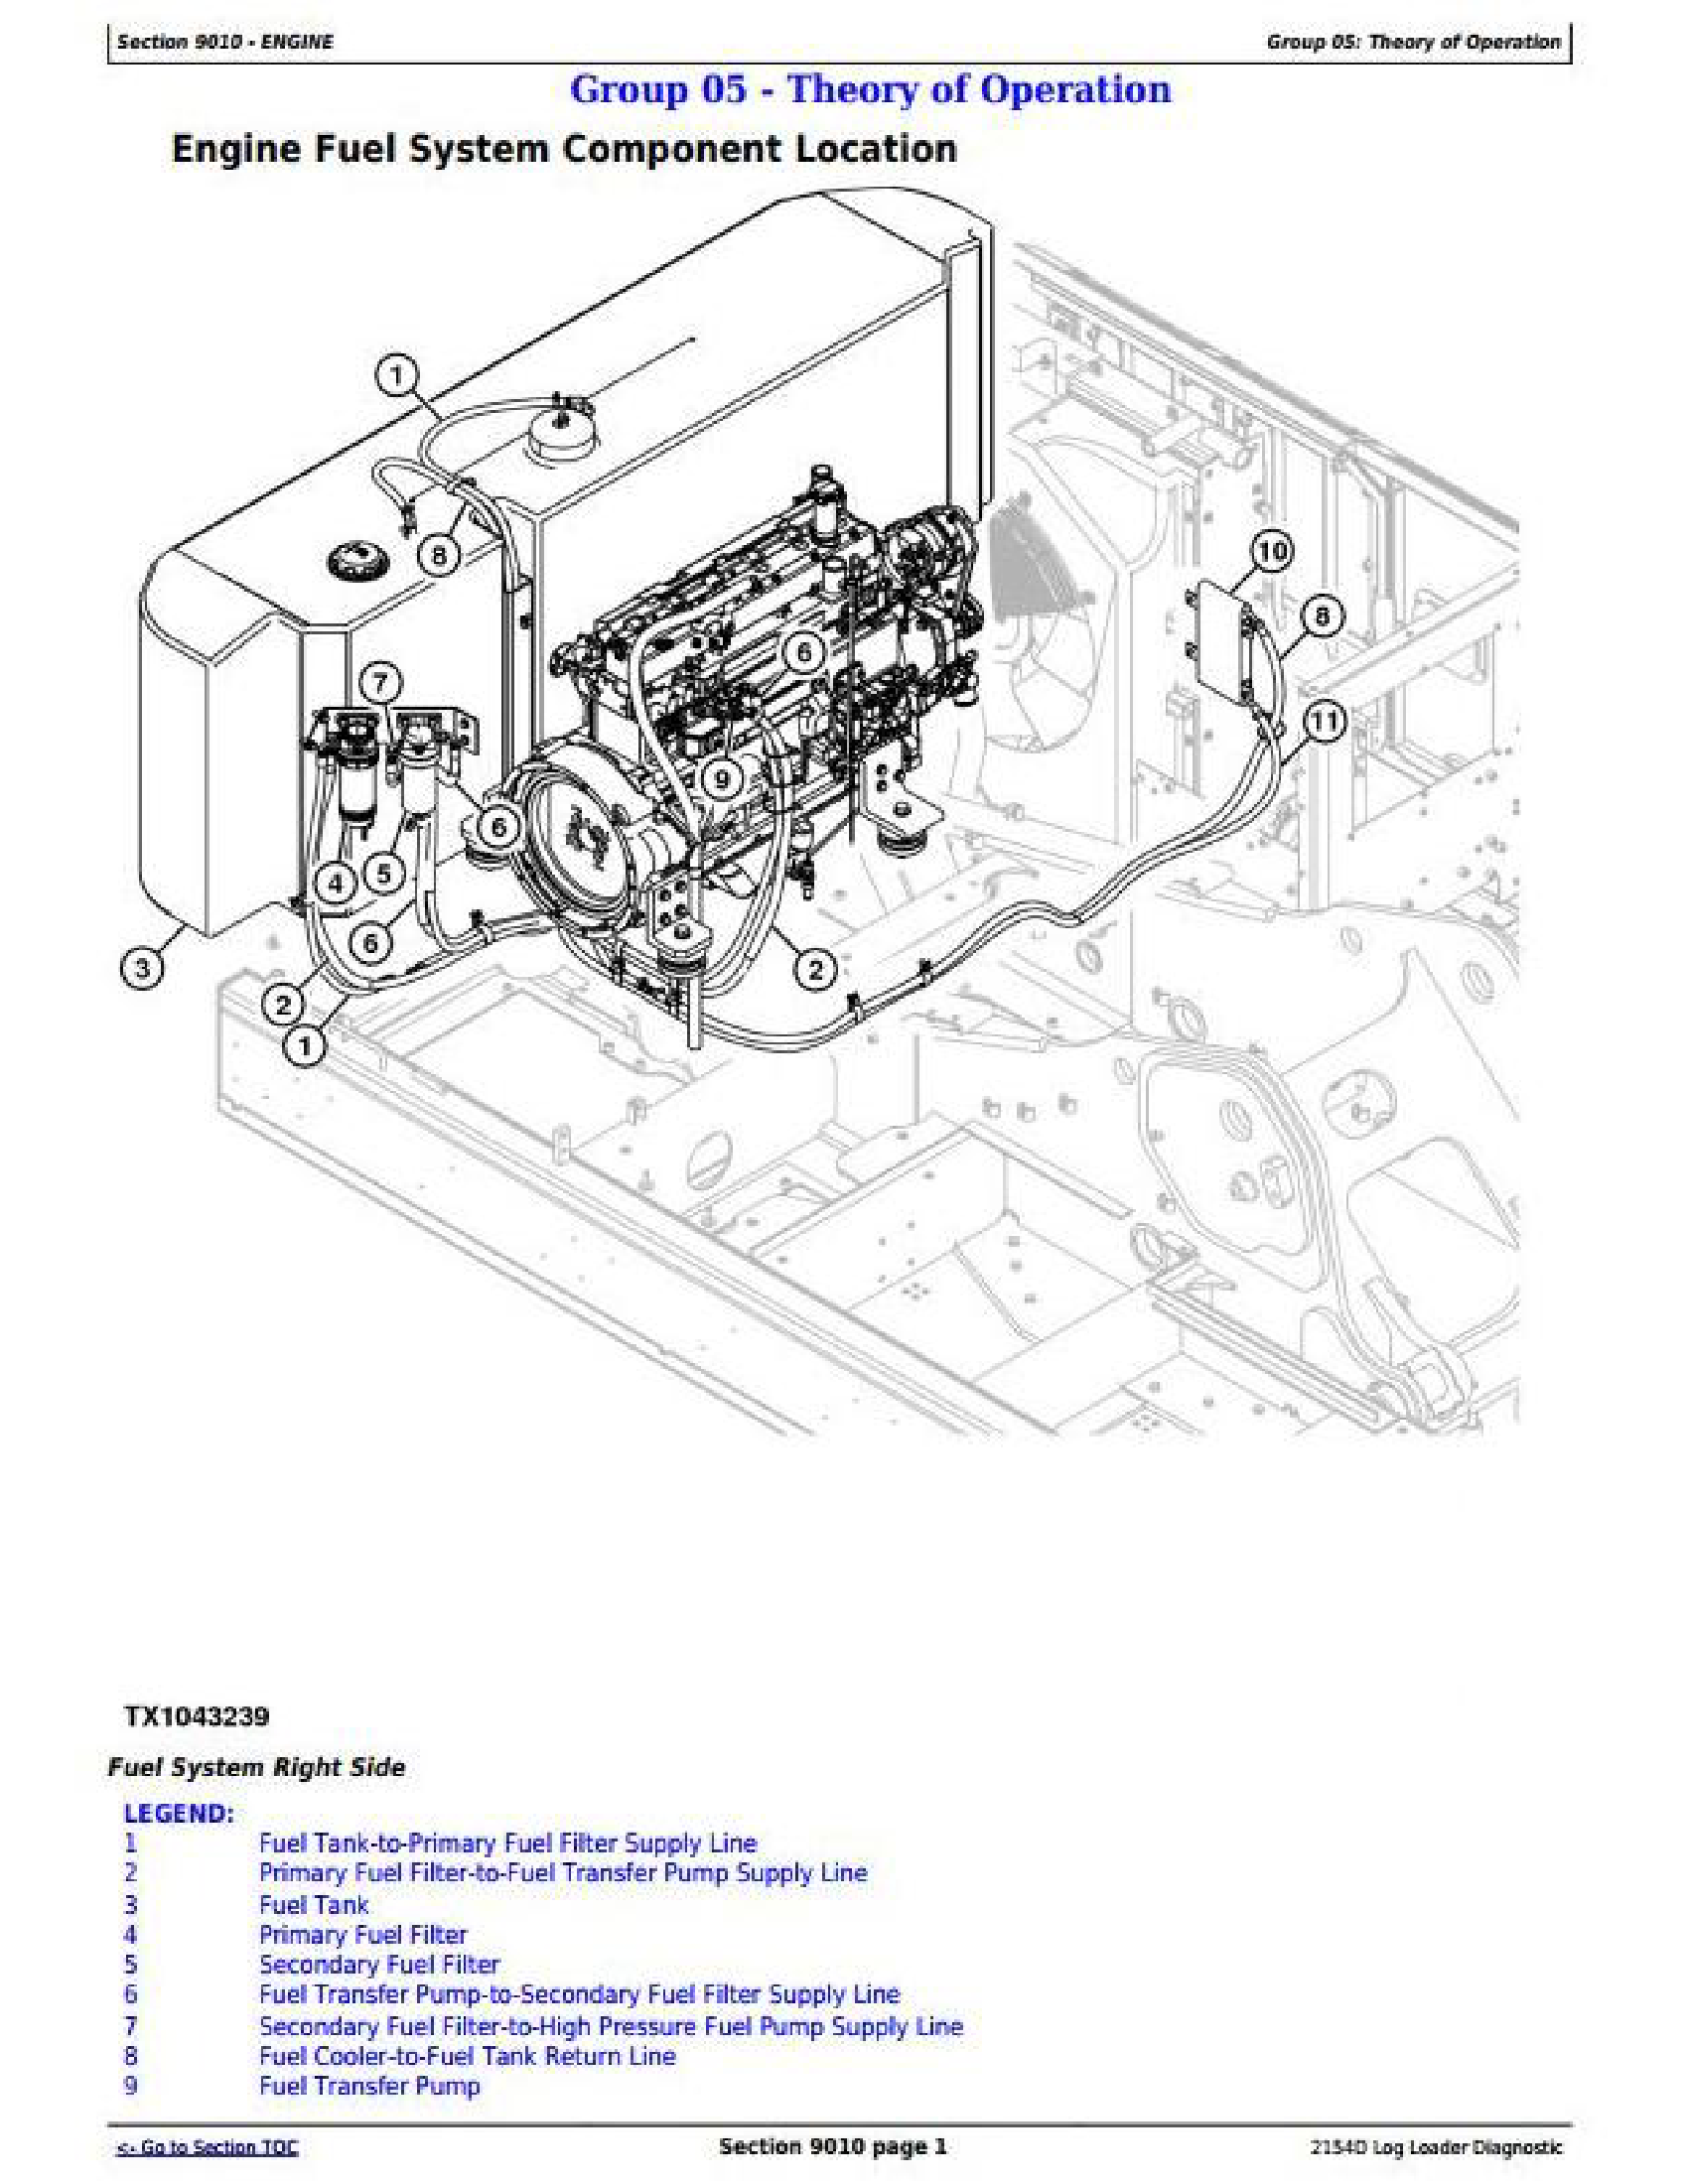 John Deere 2154D manual pdf